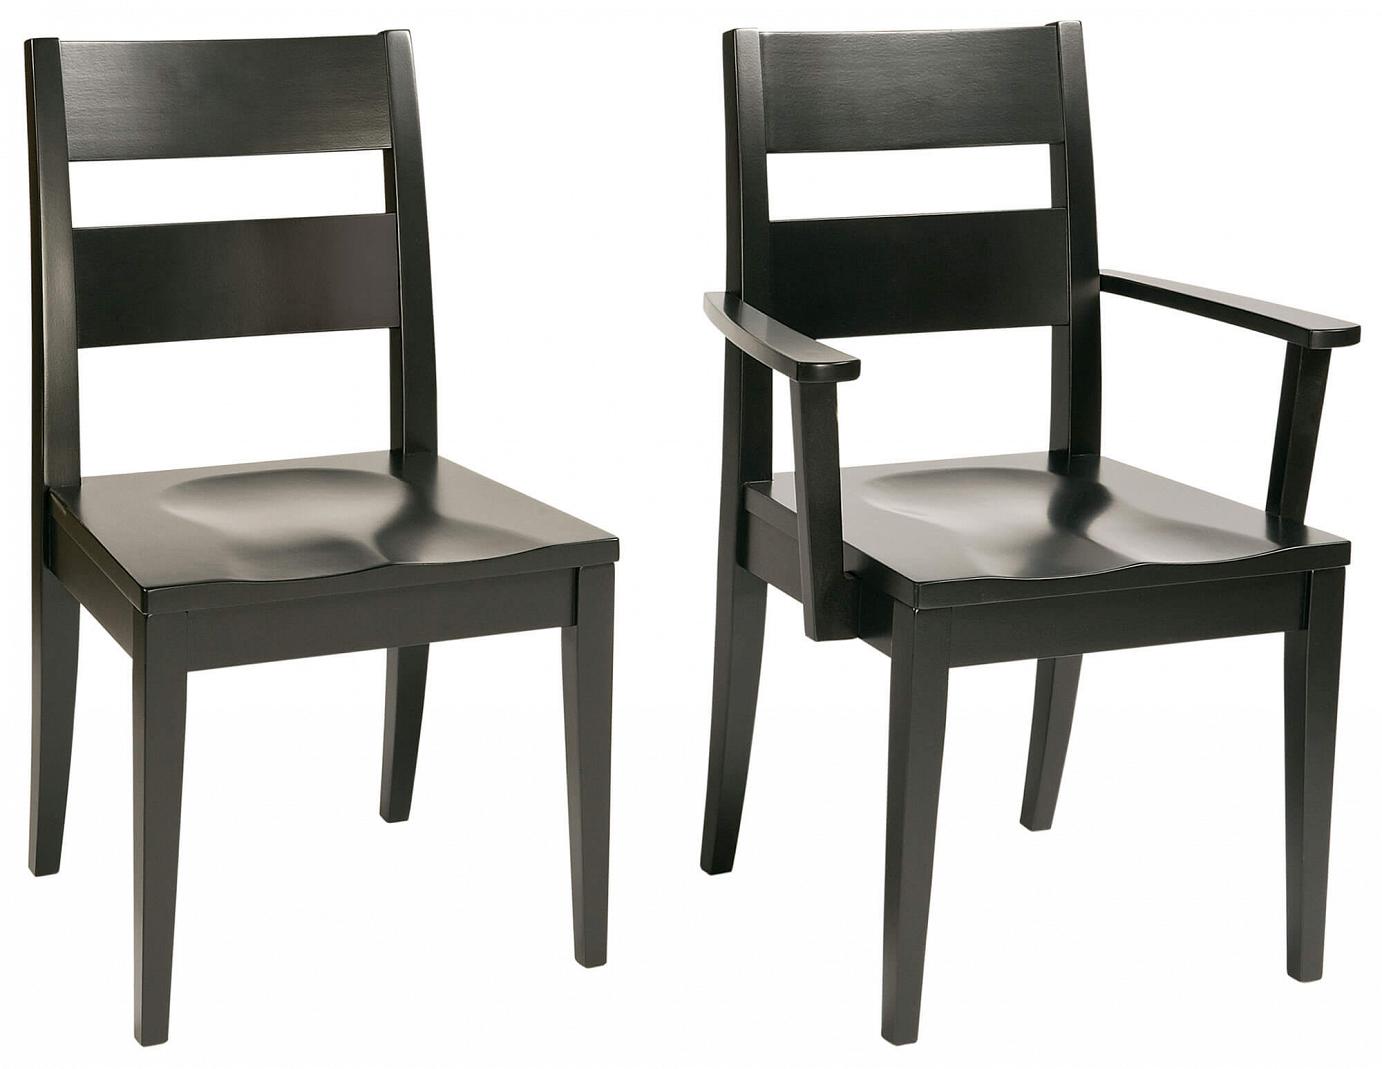 RH Yoder Carson Chairs